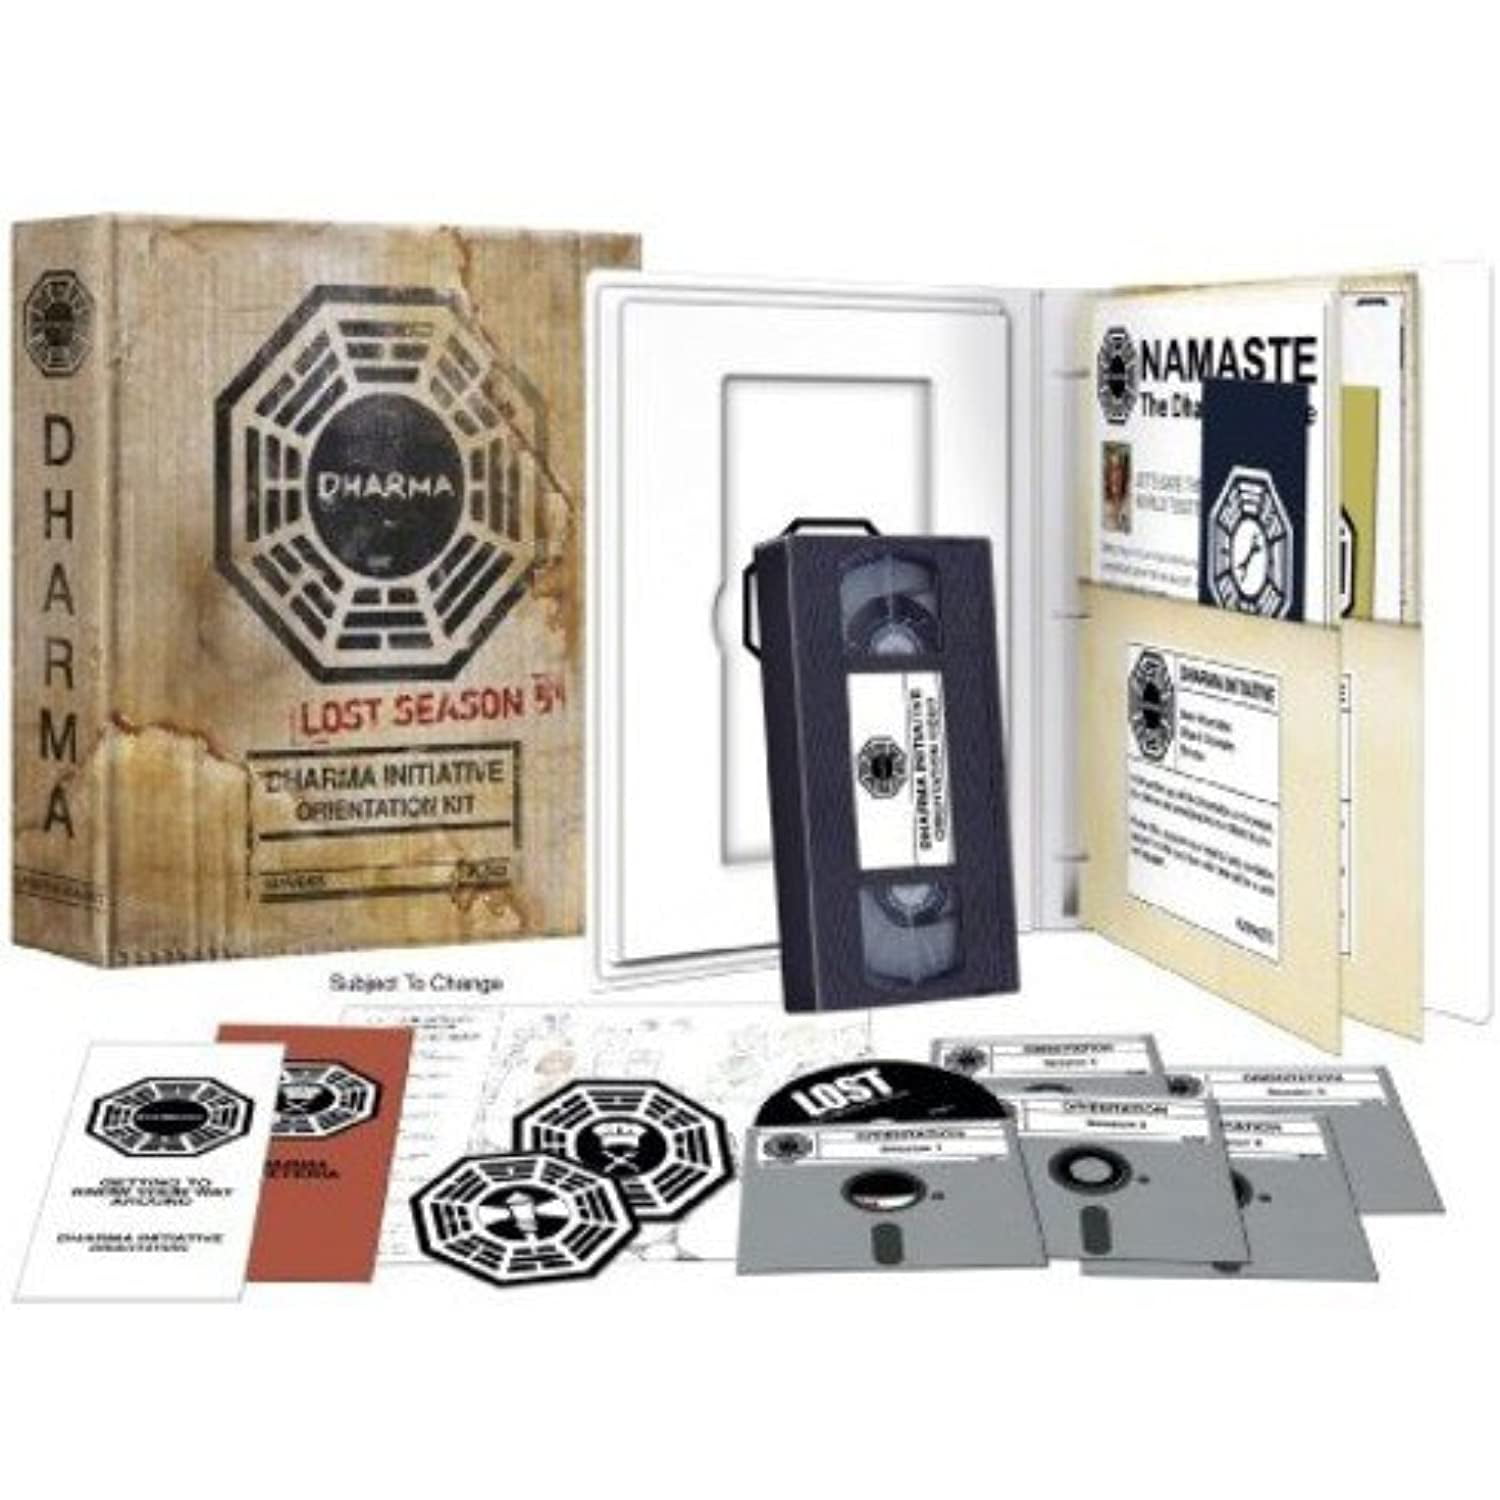 Lost: Season 5 Dharma Initiative Orientation Kit [Blu-ray